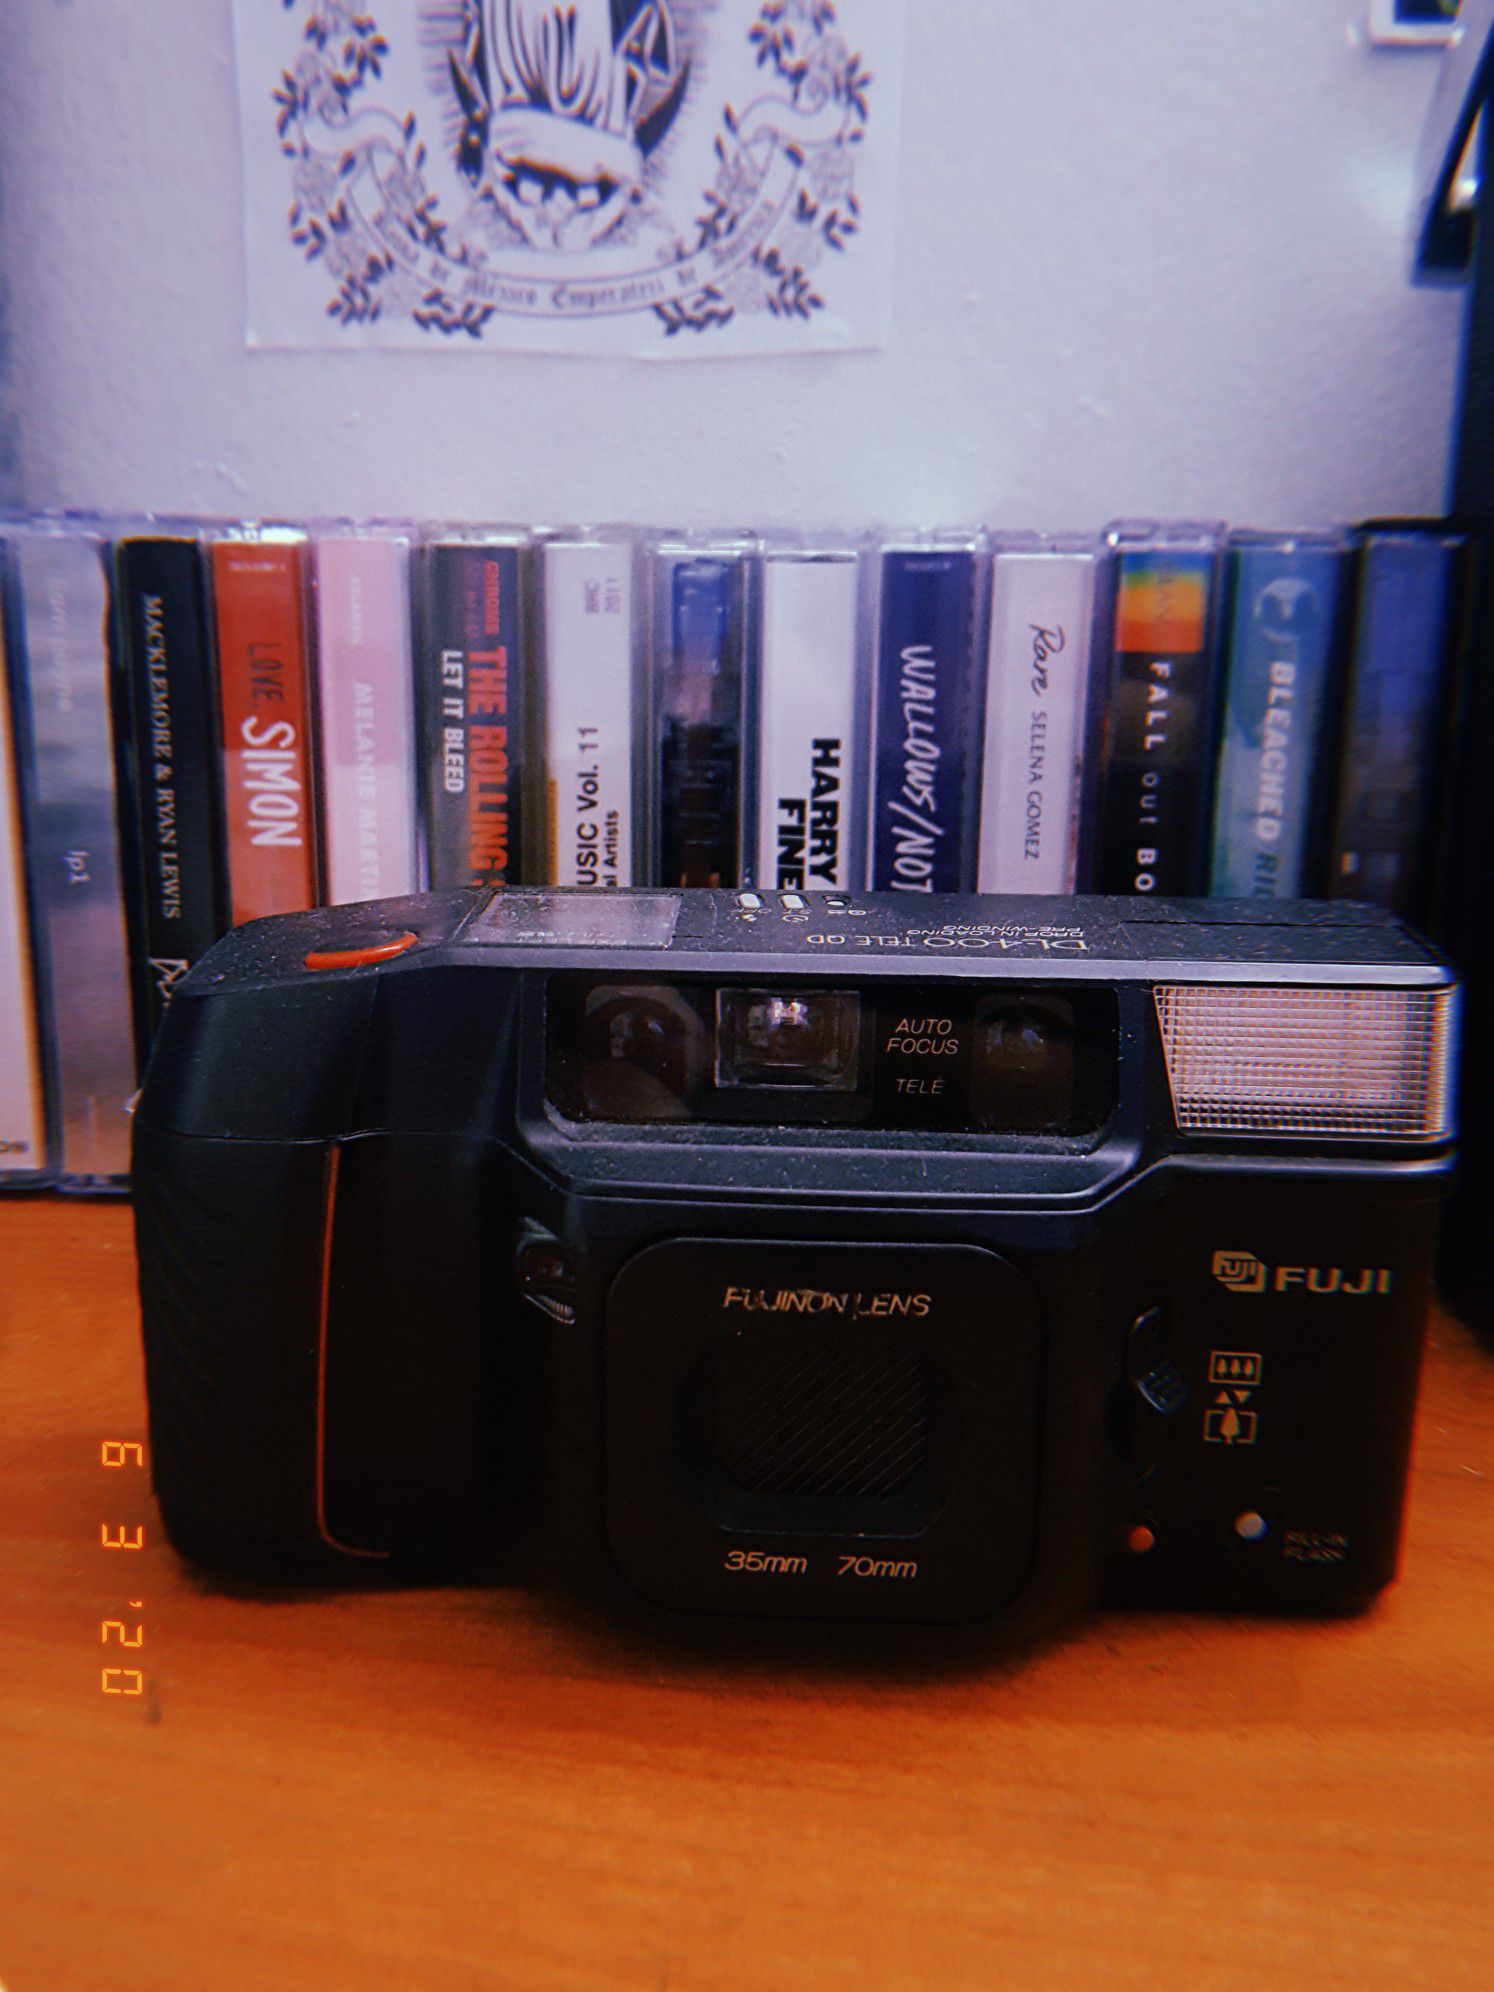 Fuji 35mm camera